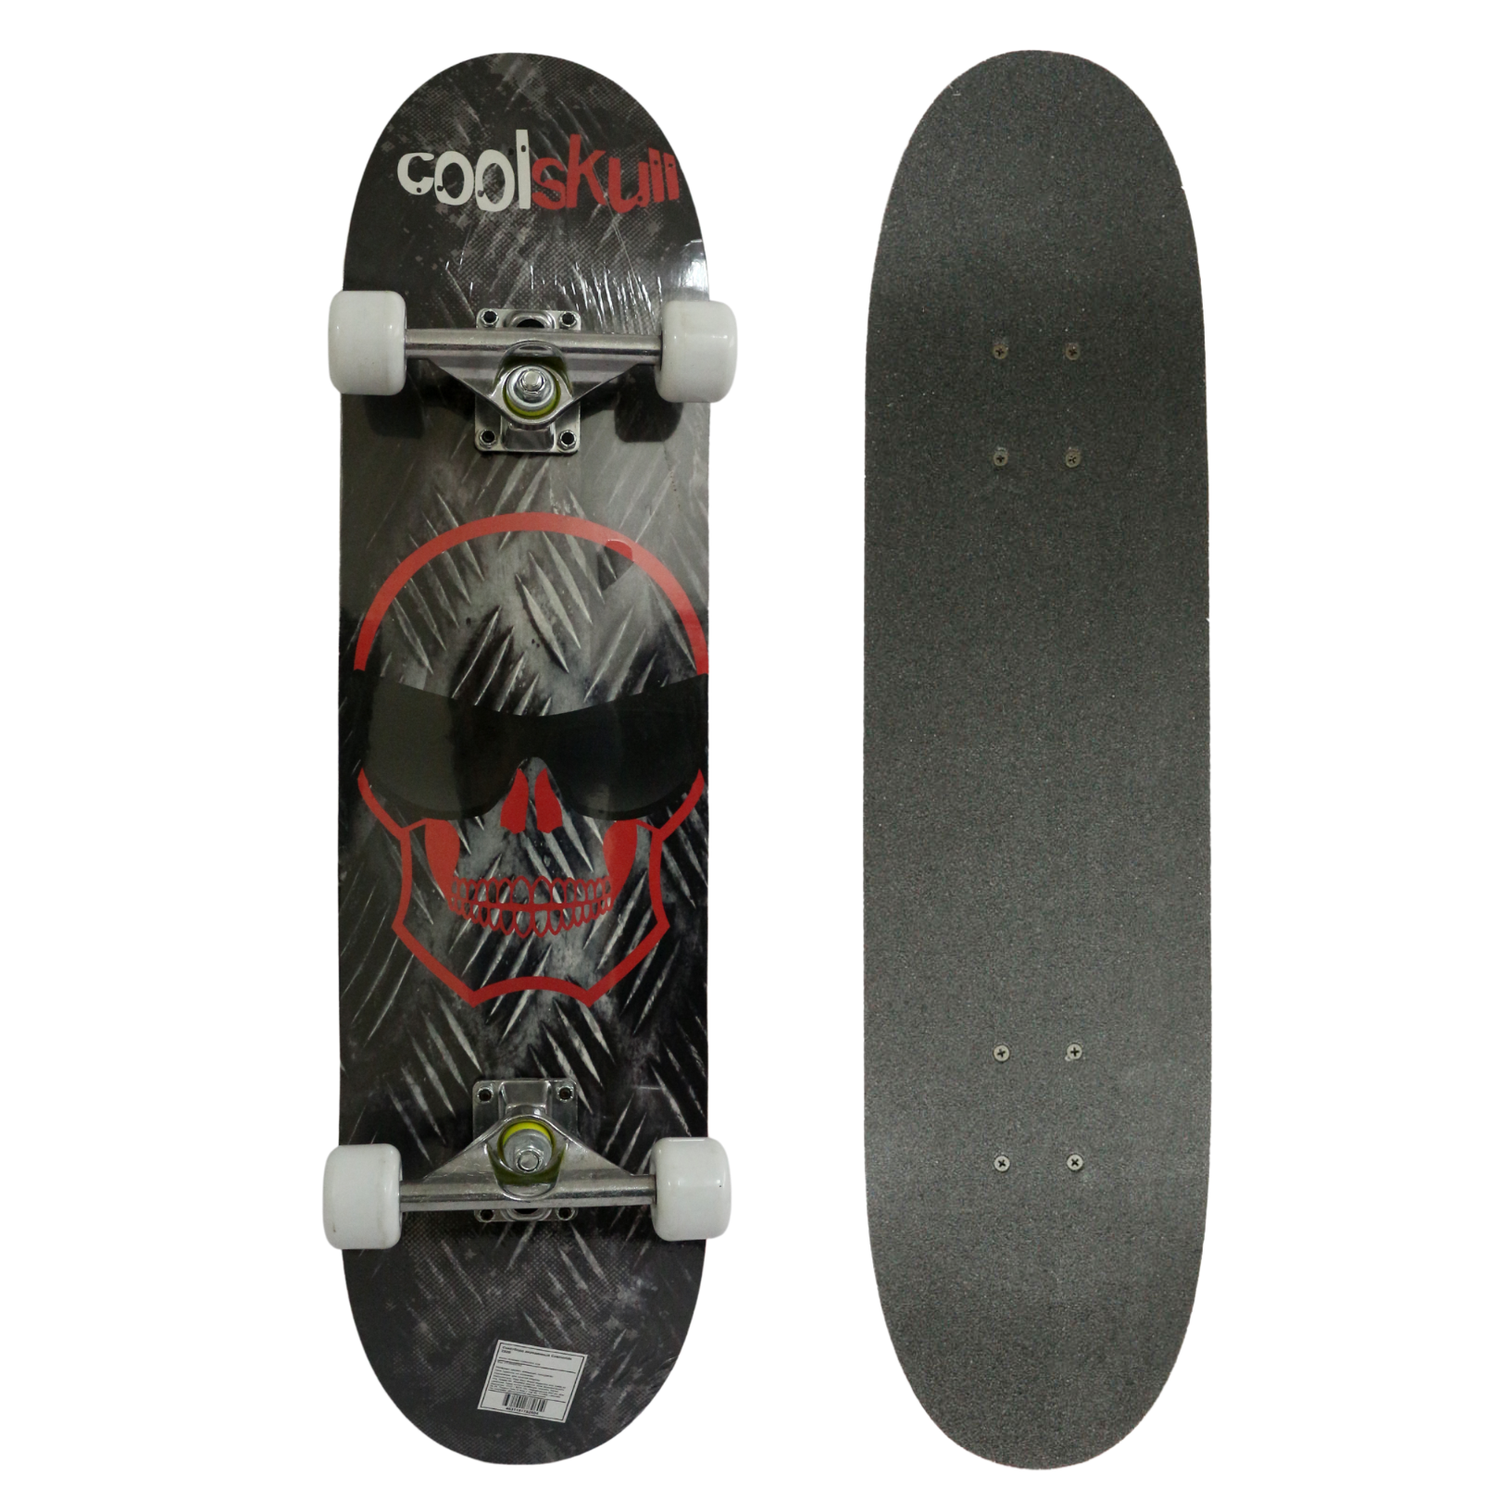 Скейтборд деревянный Cosmo 222B Cool skull - фото 1